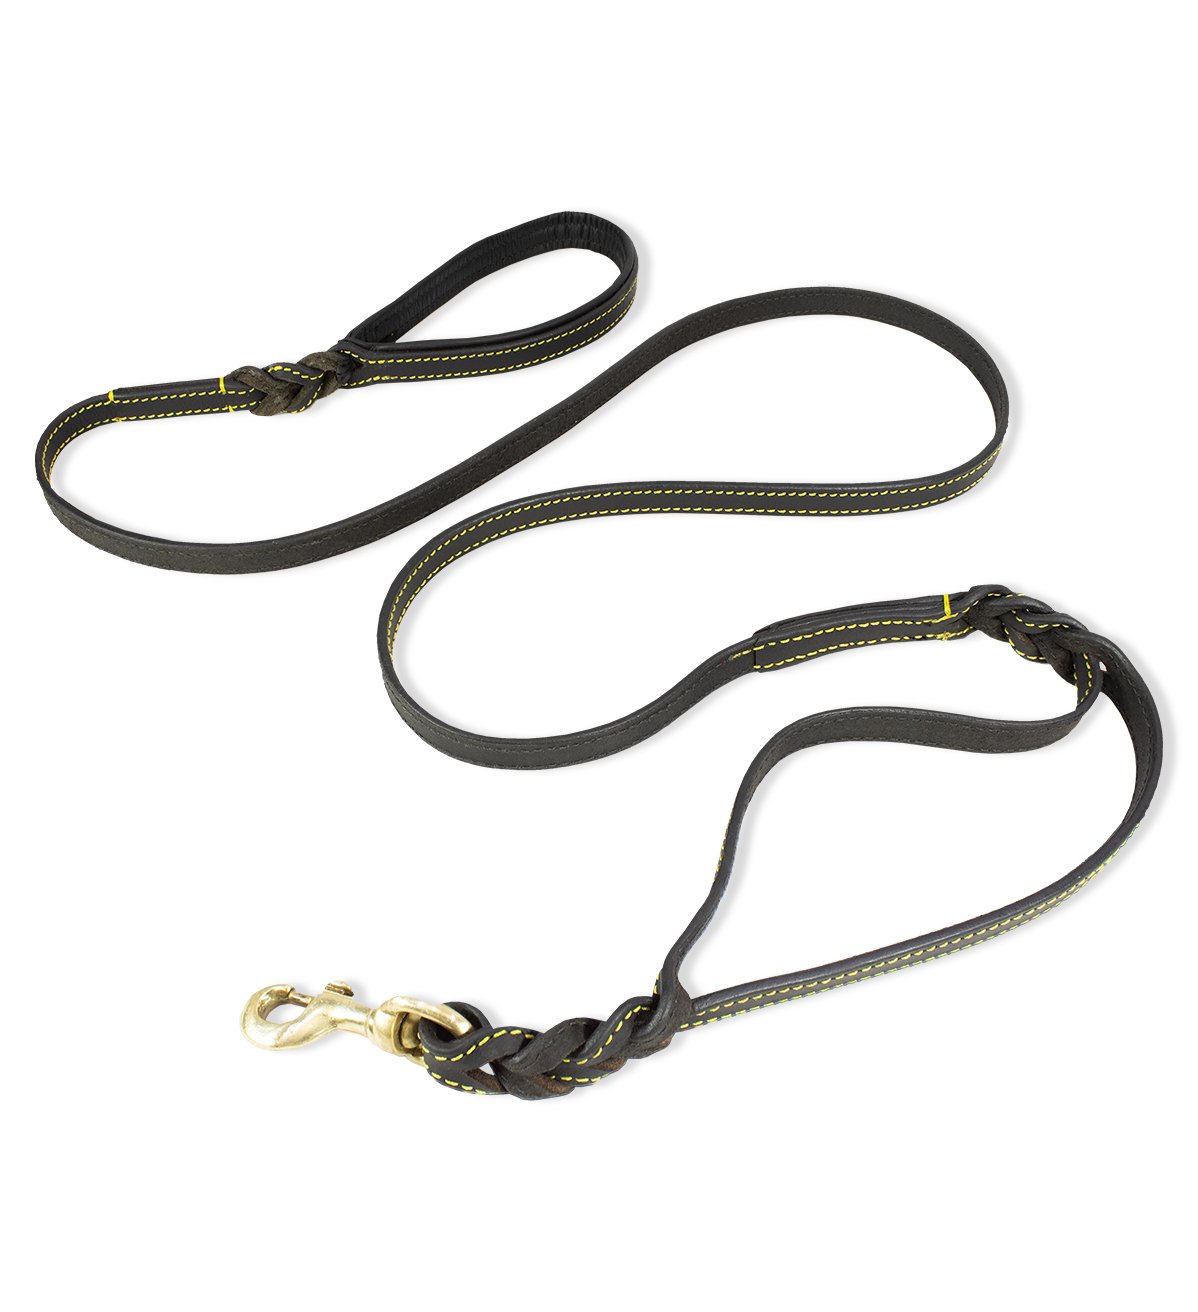 Dual Handle Dog Leash – #PA-3-06D